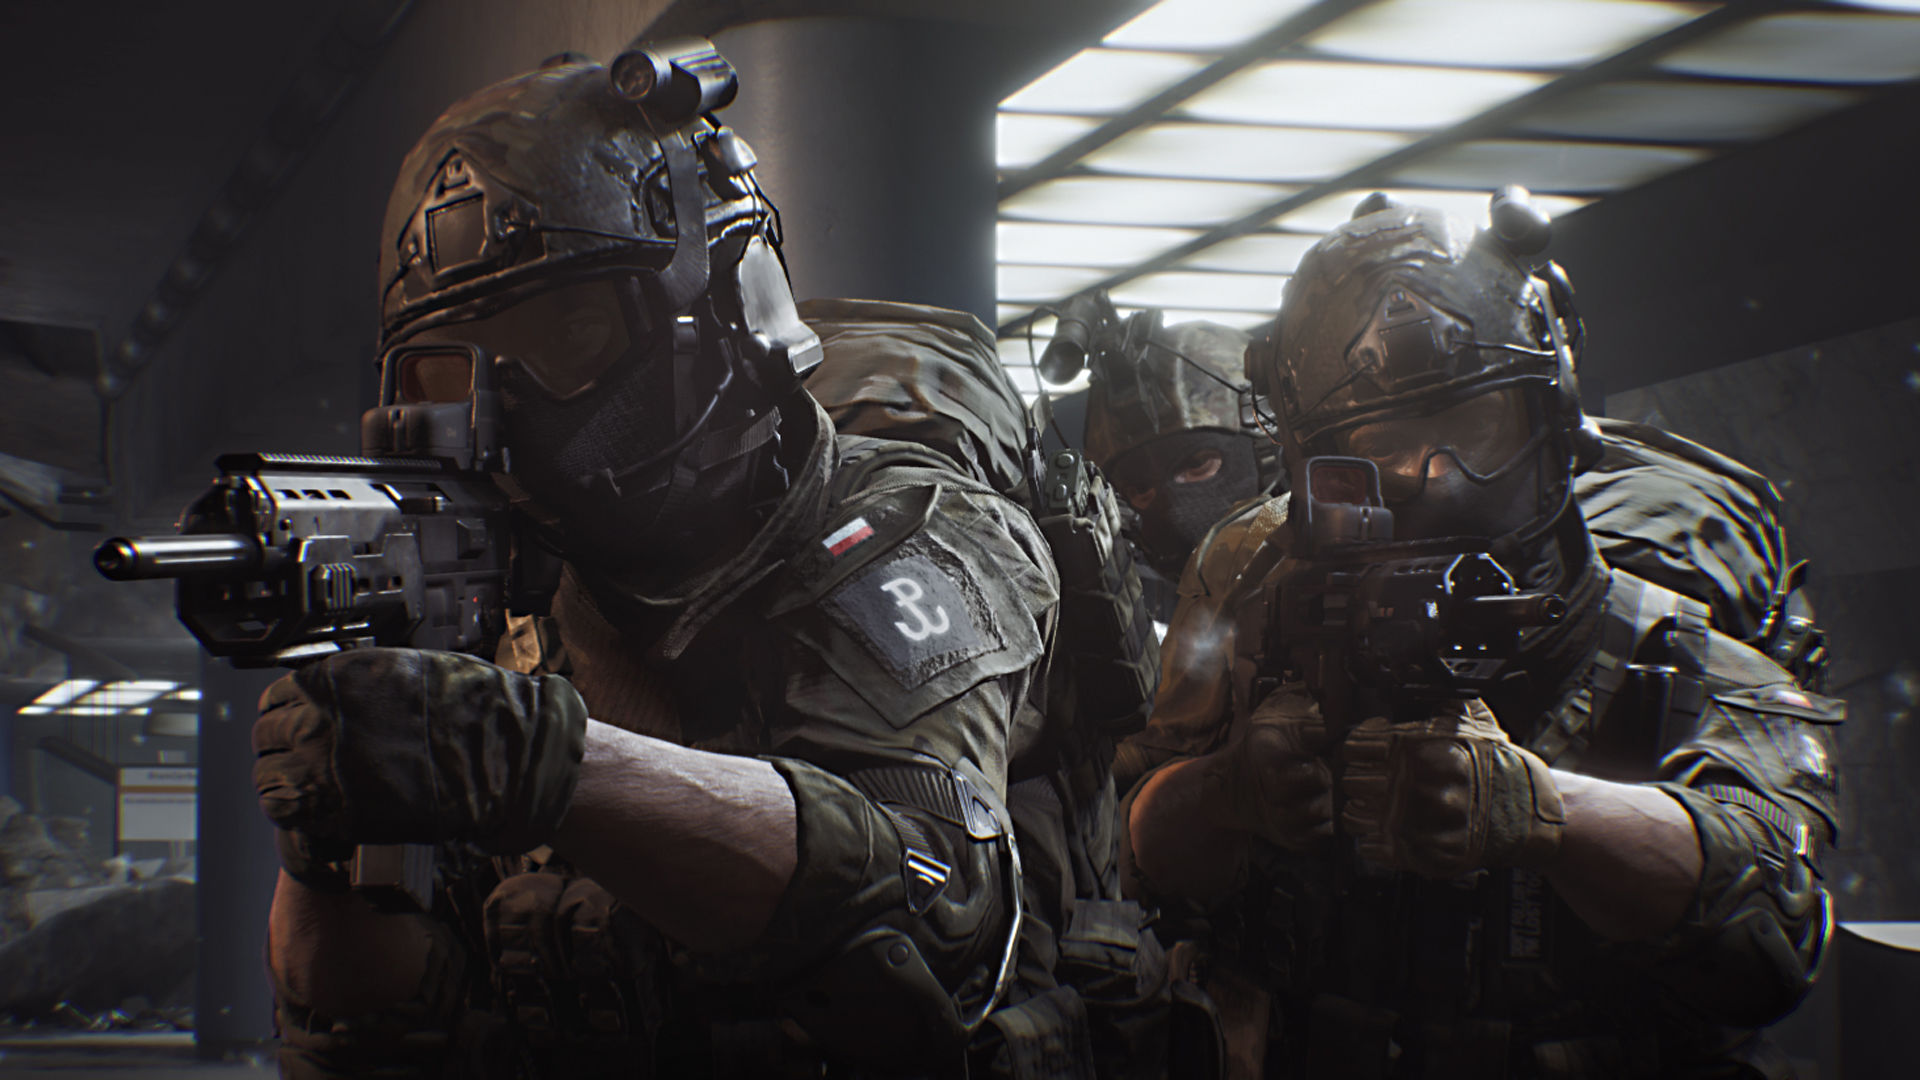 Fps, savaş oyunu World War 3, Gamescom'da oynanabilir olacak